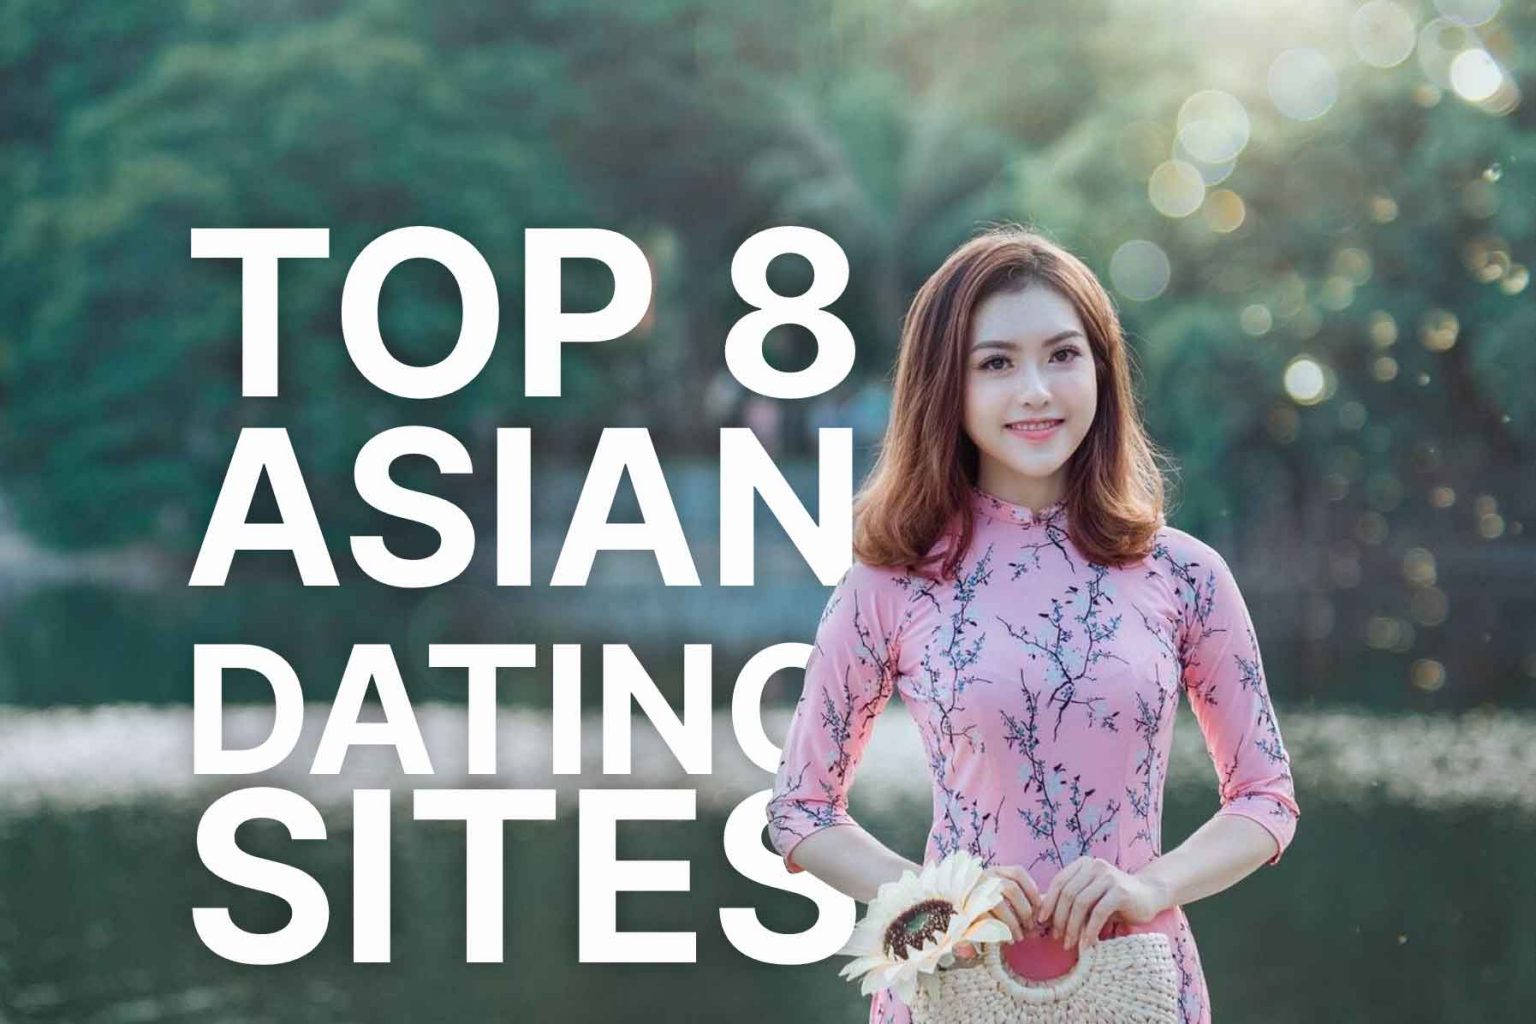 Best asian dating sites uk Clarksville
